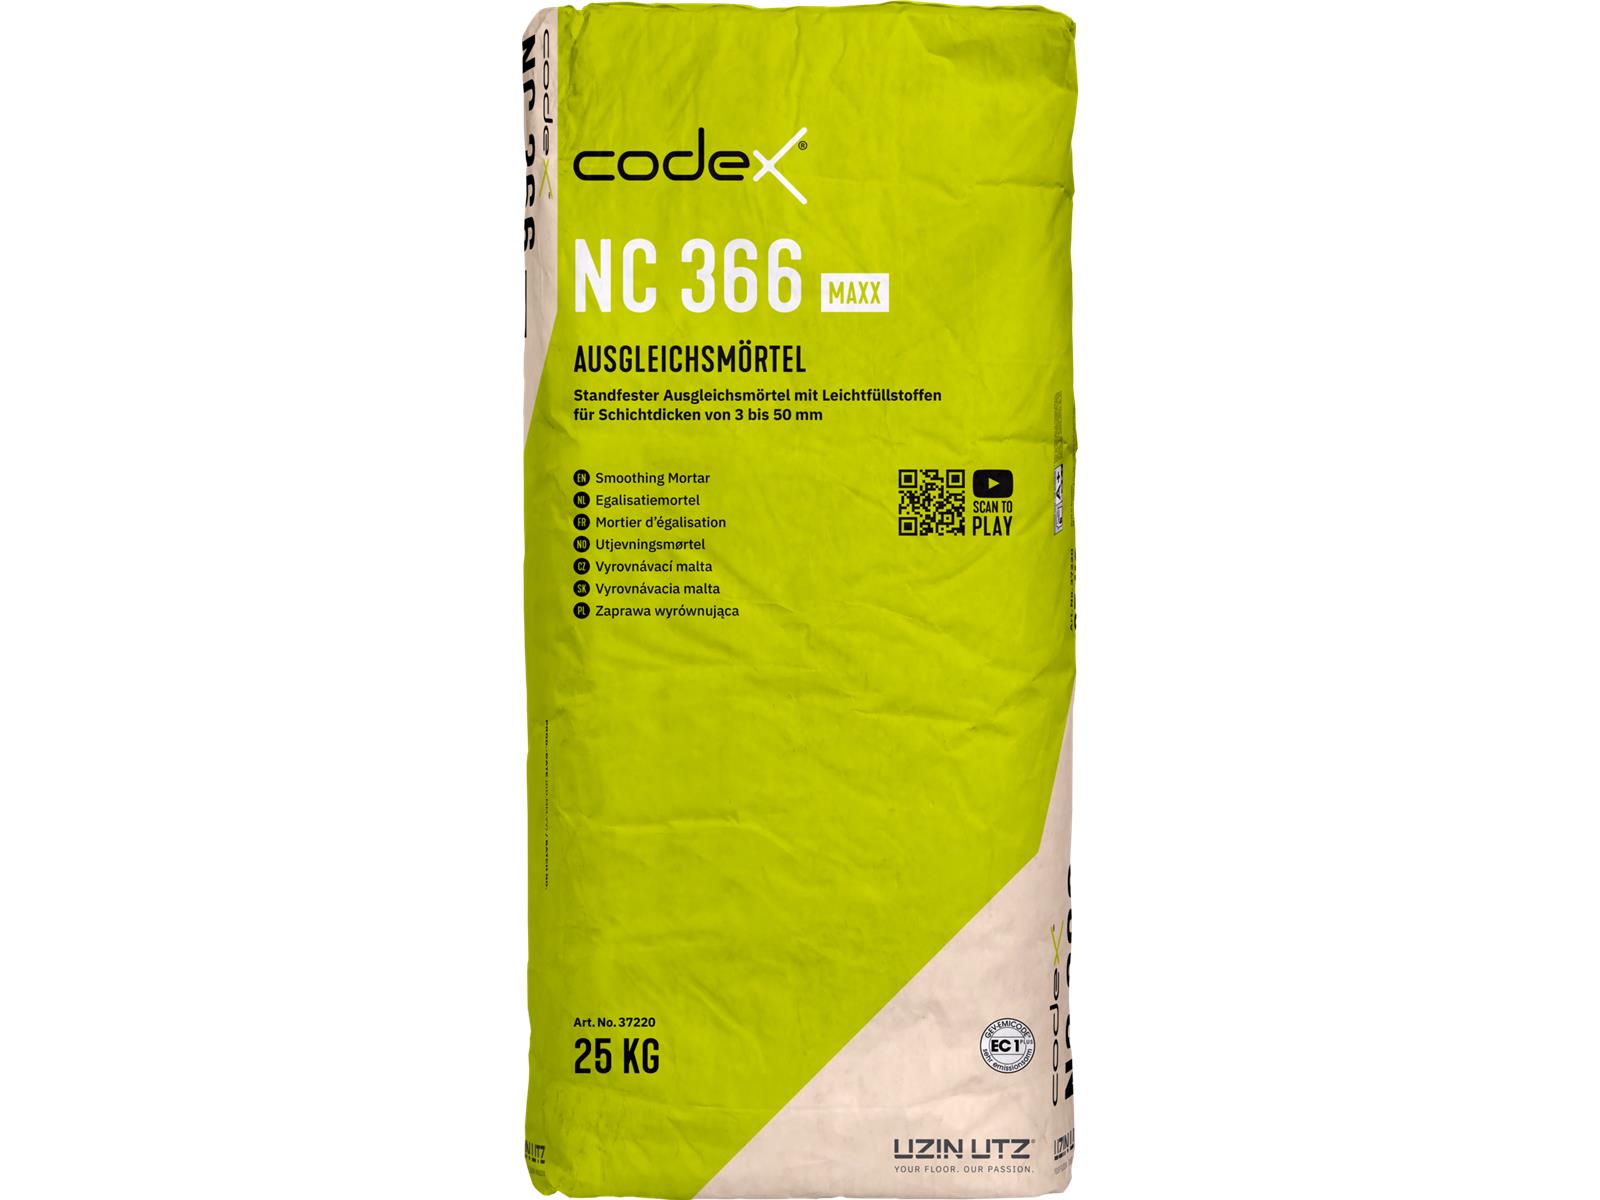 codex NC 366 Maxx - 25 kg